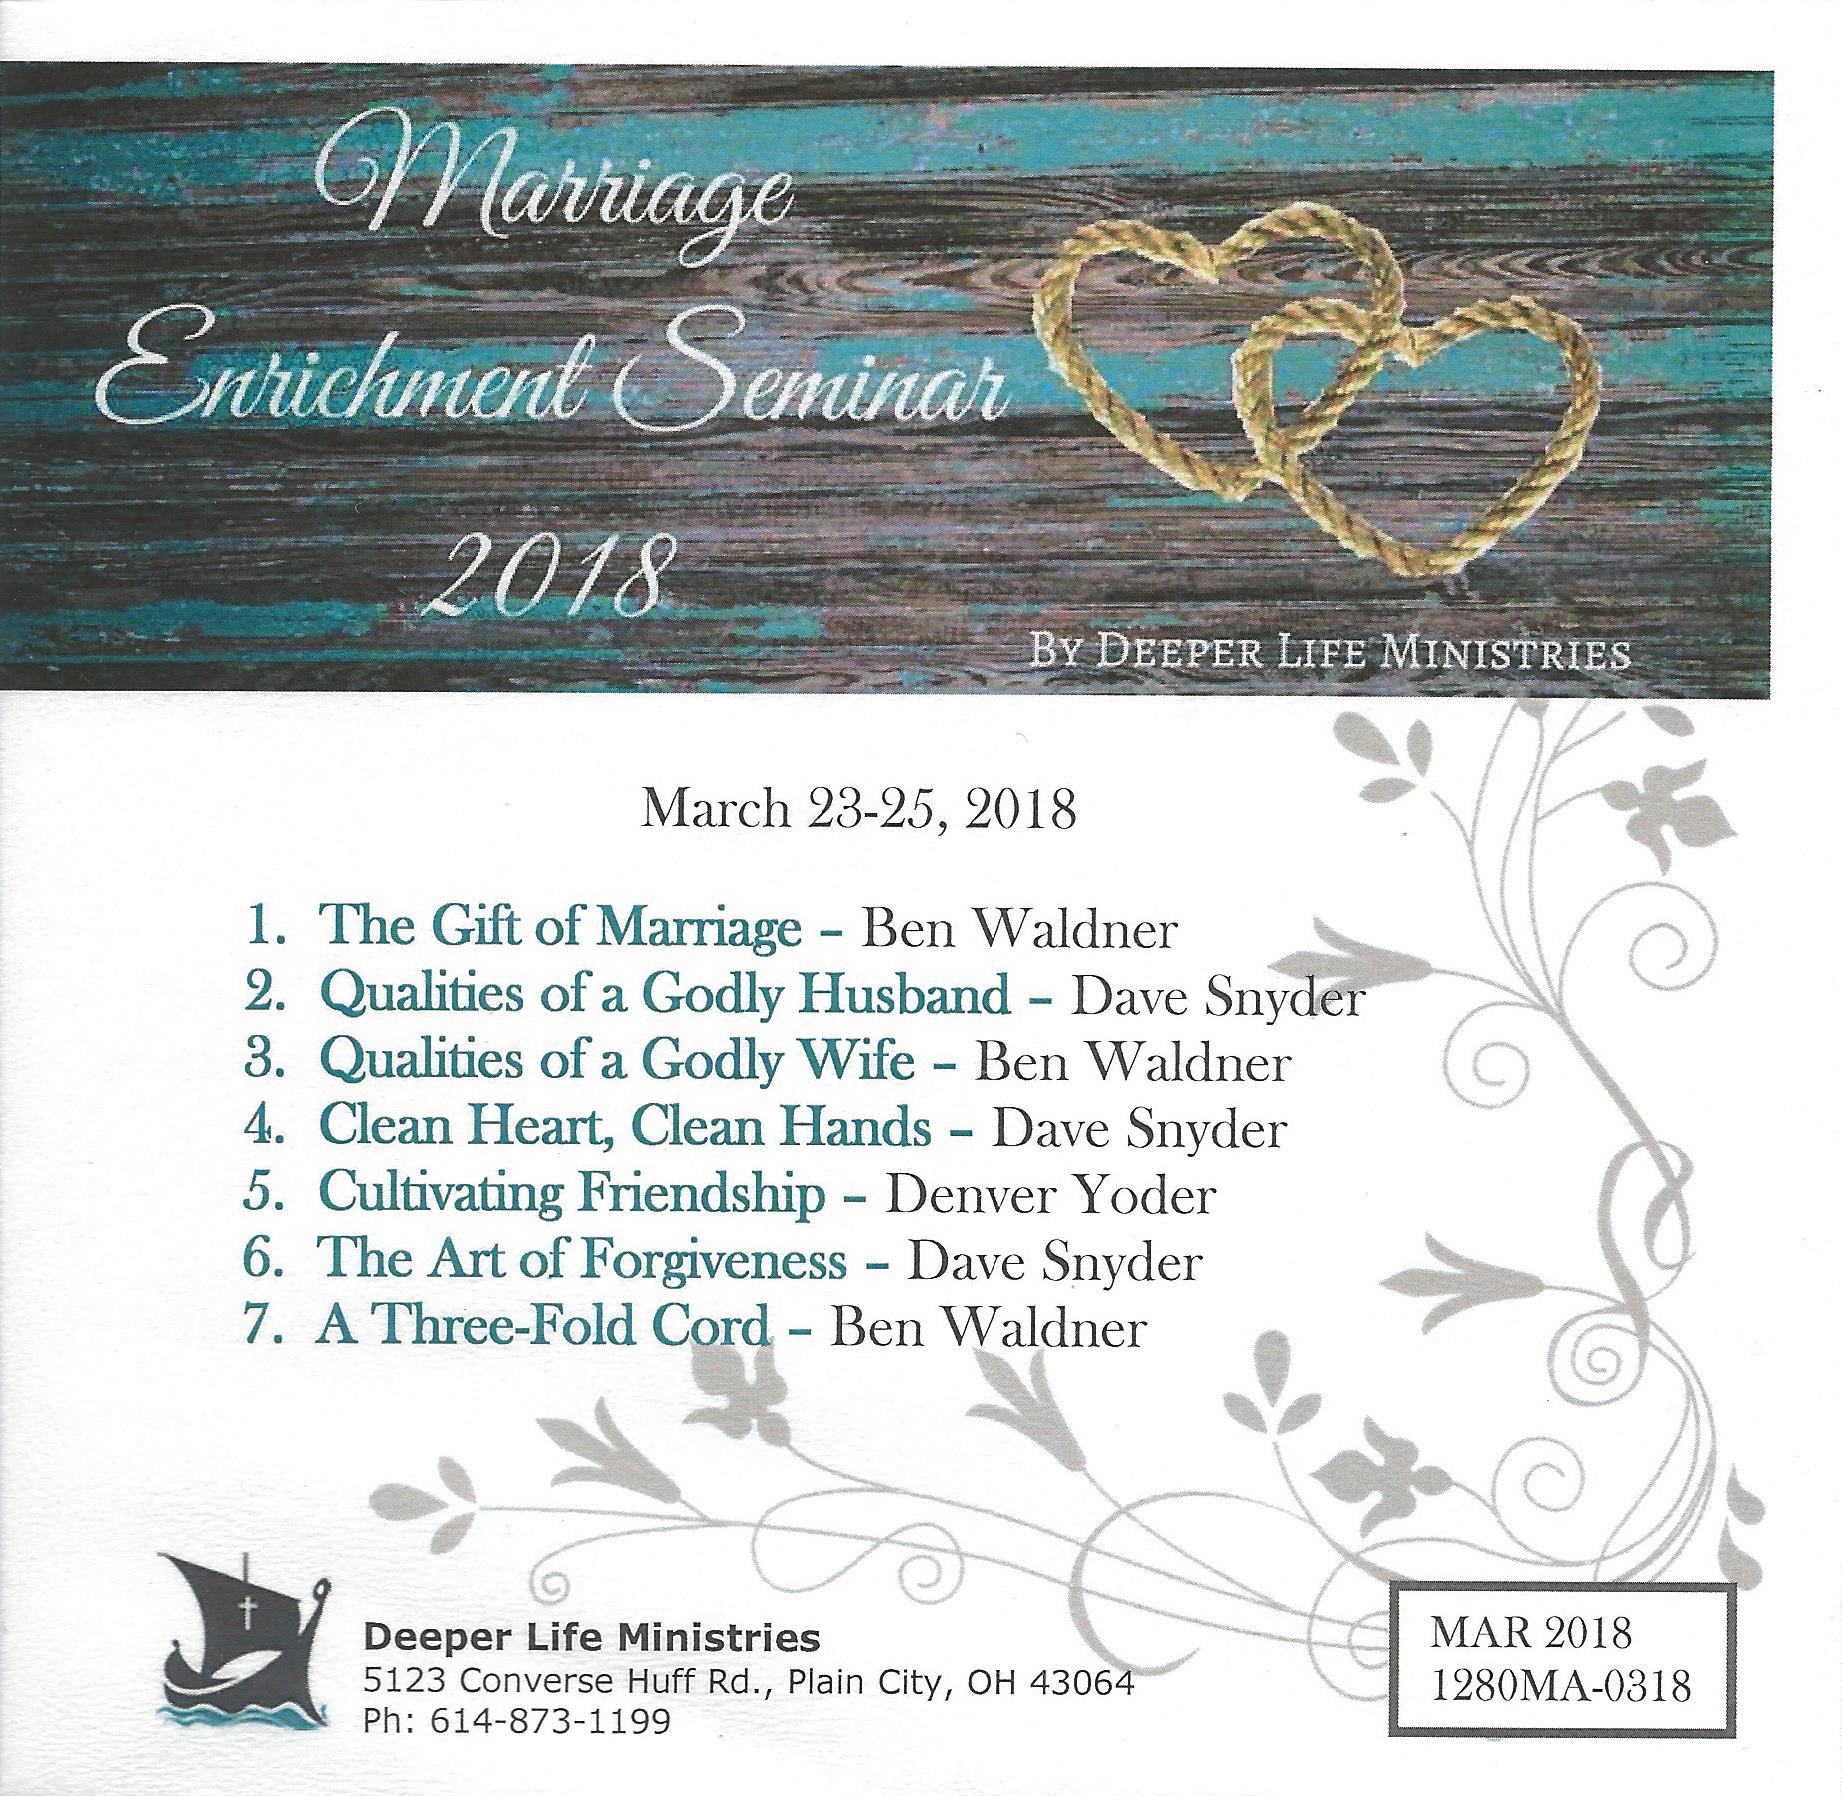 MARRIAGE ENRICHMENT SEMINAR 2018 7 CD Album